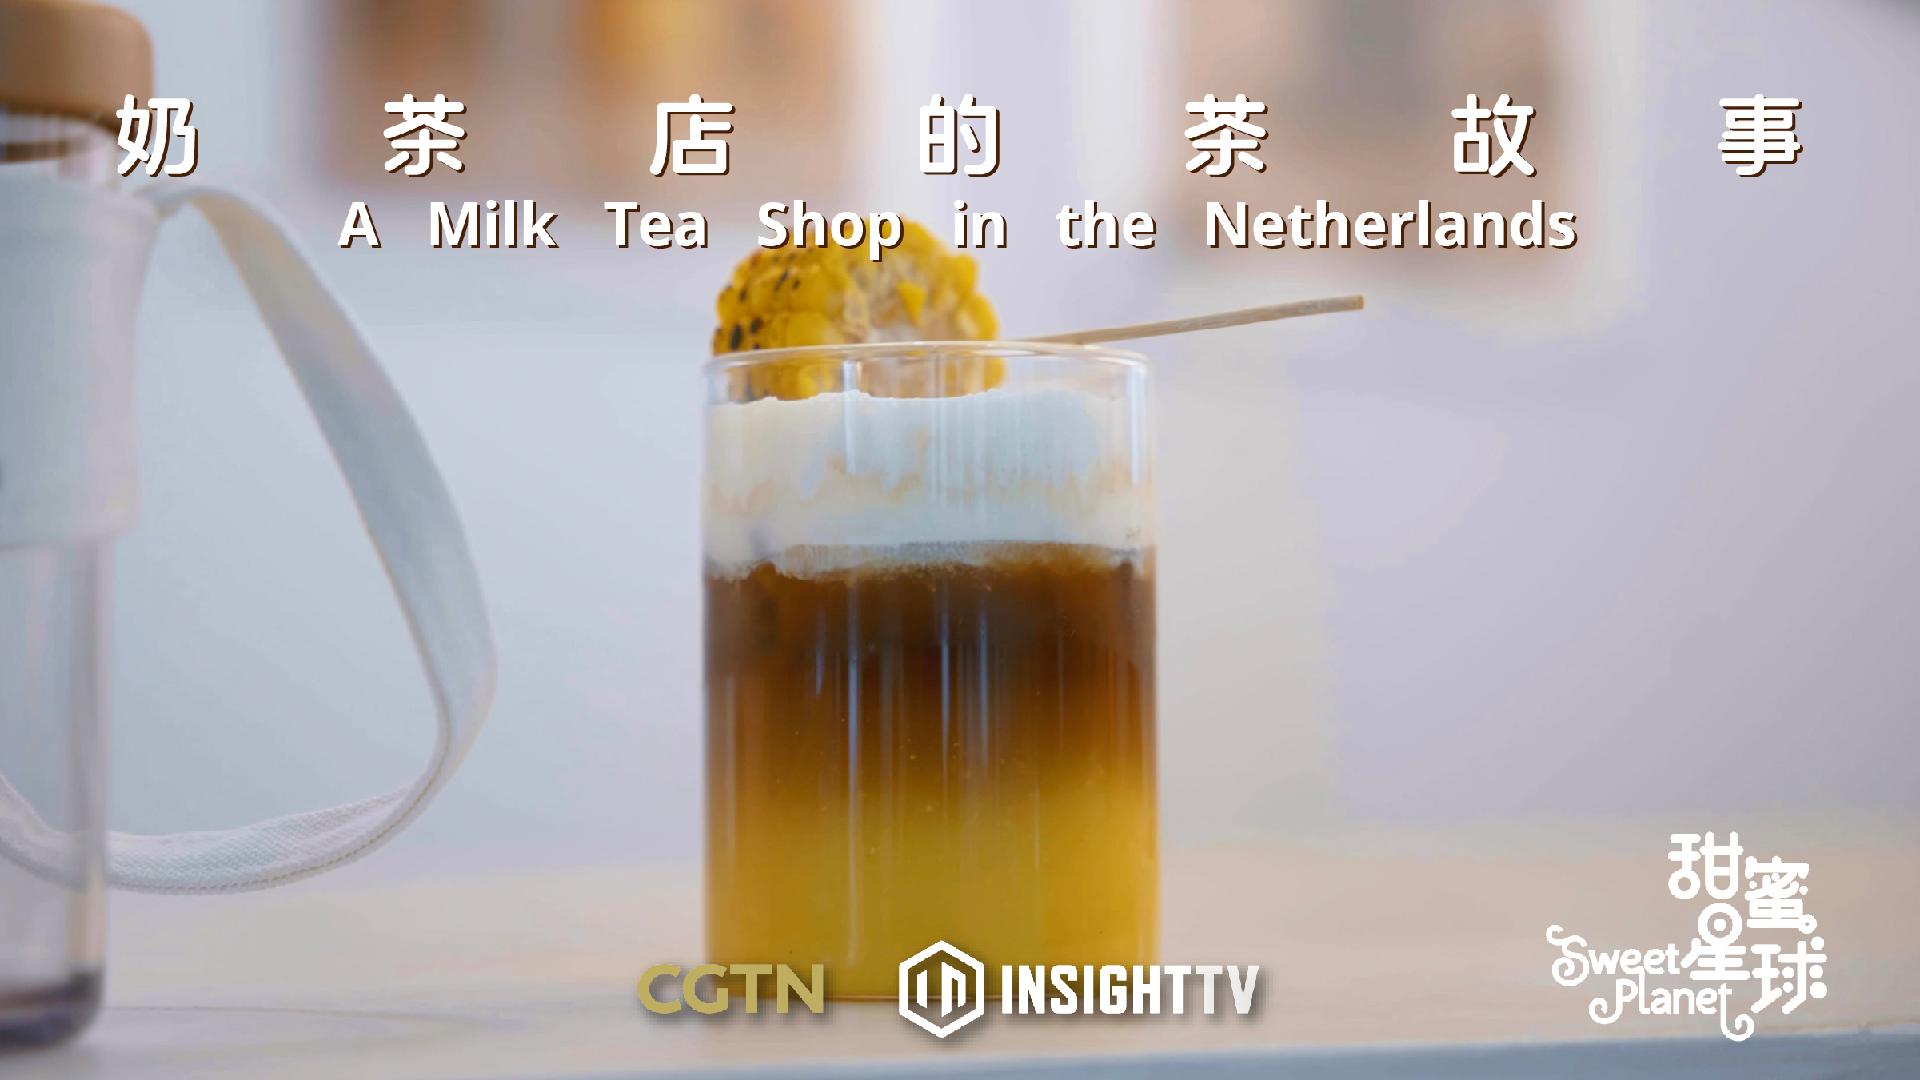 Sweet Planet: A milk tea shop in the Netherlands [Video]